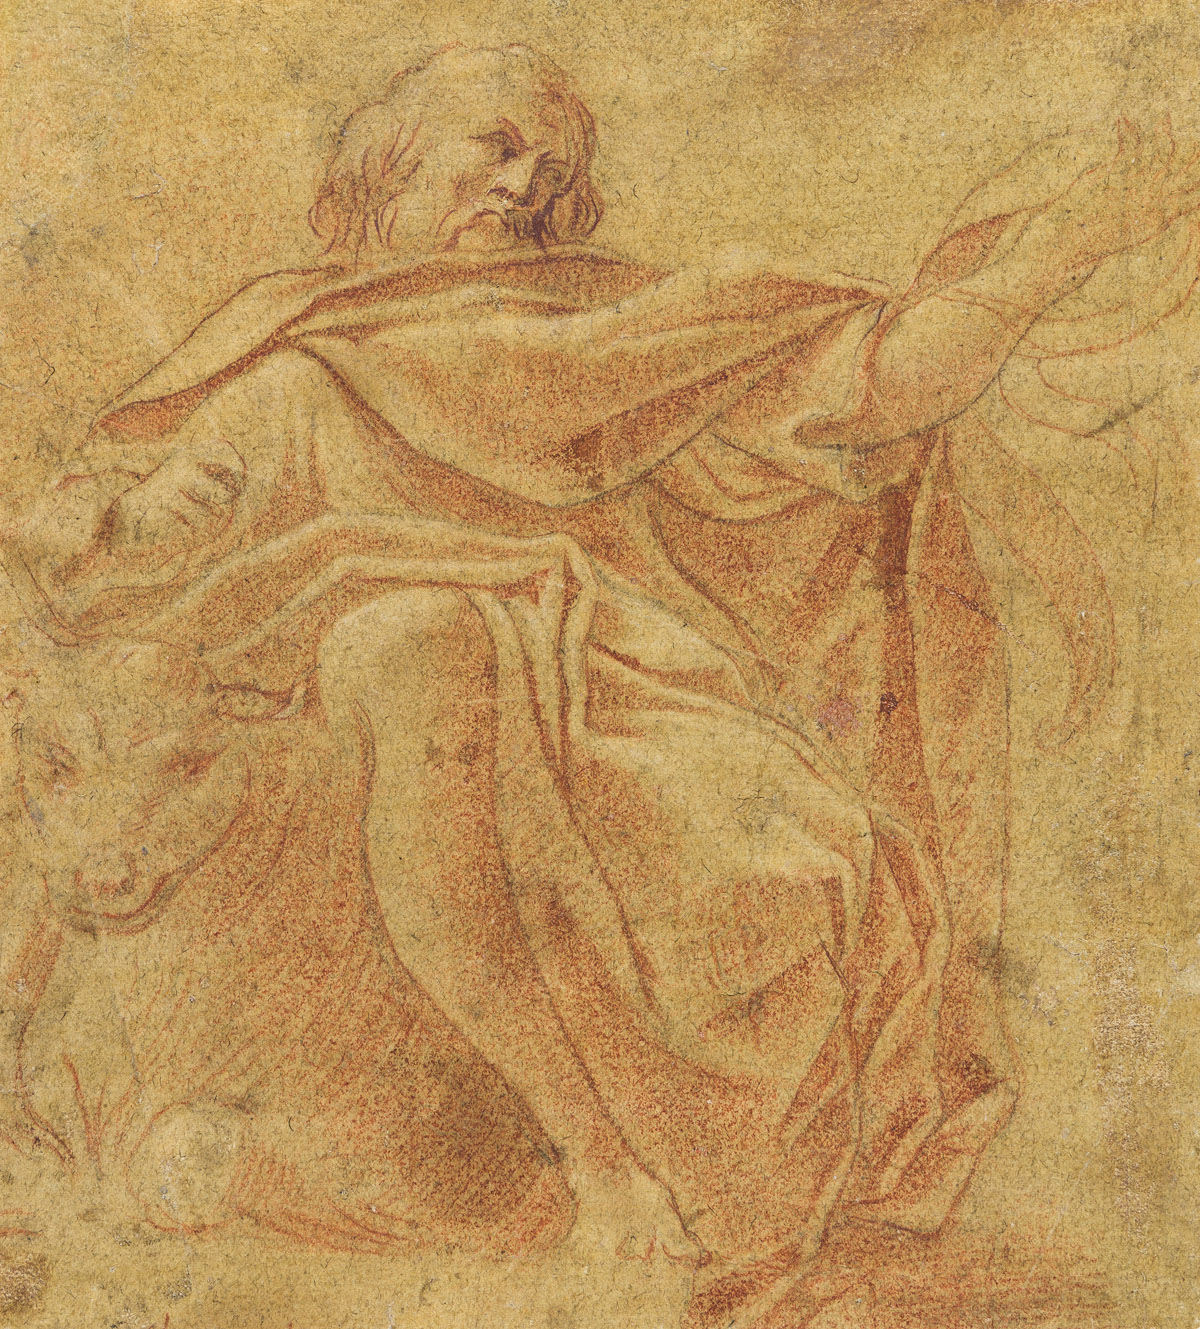 LUDOVICO CARRACCI (Bologna 1555-1619 Bologna) St. Luke.